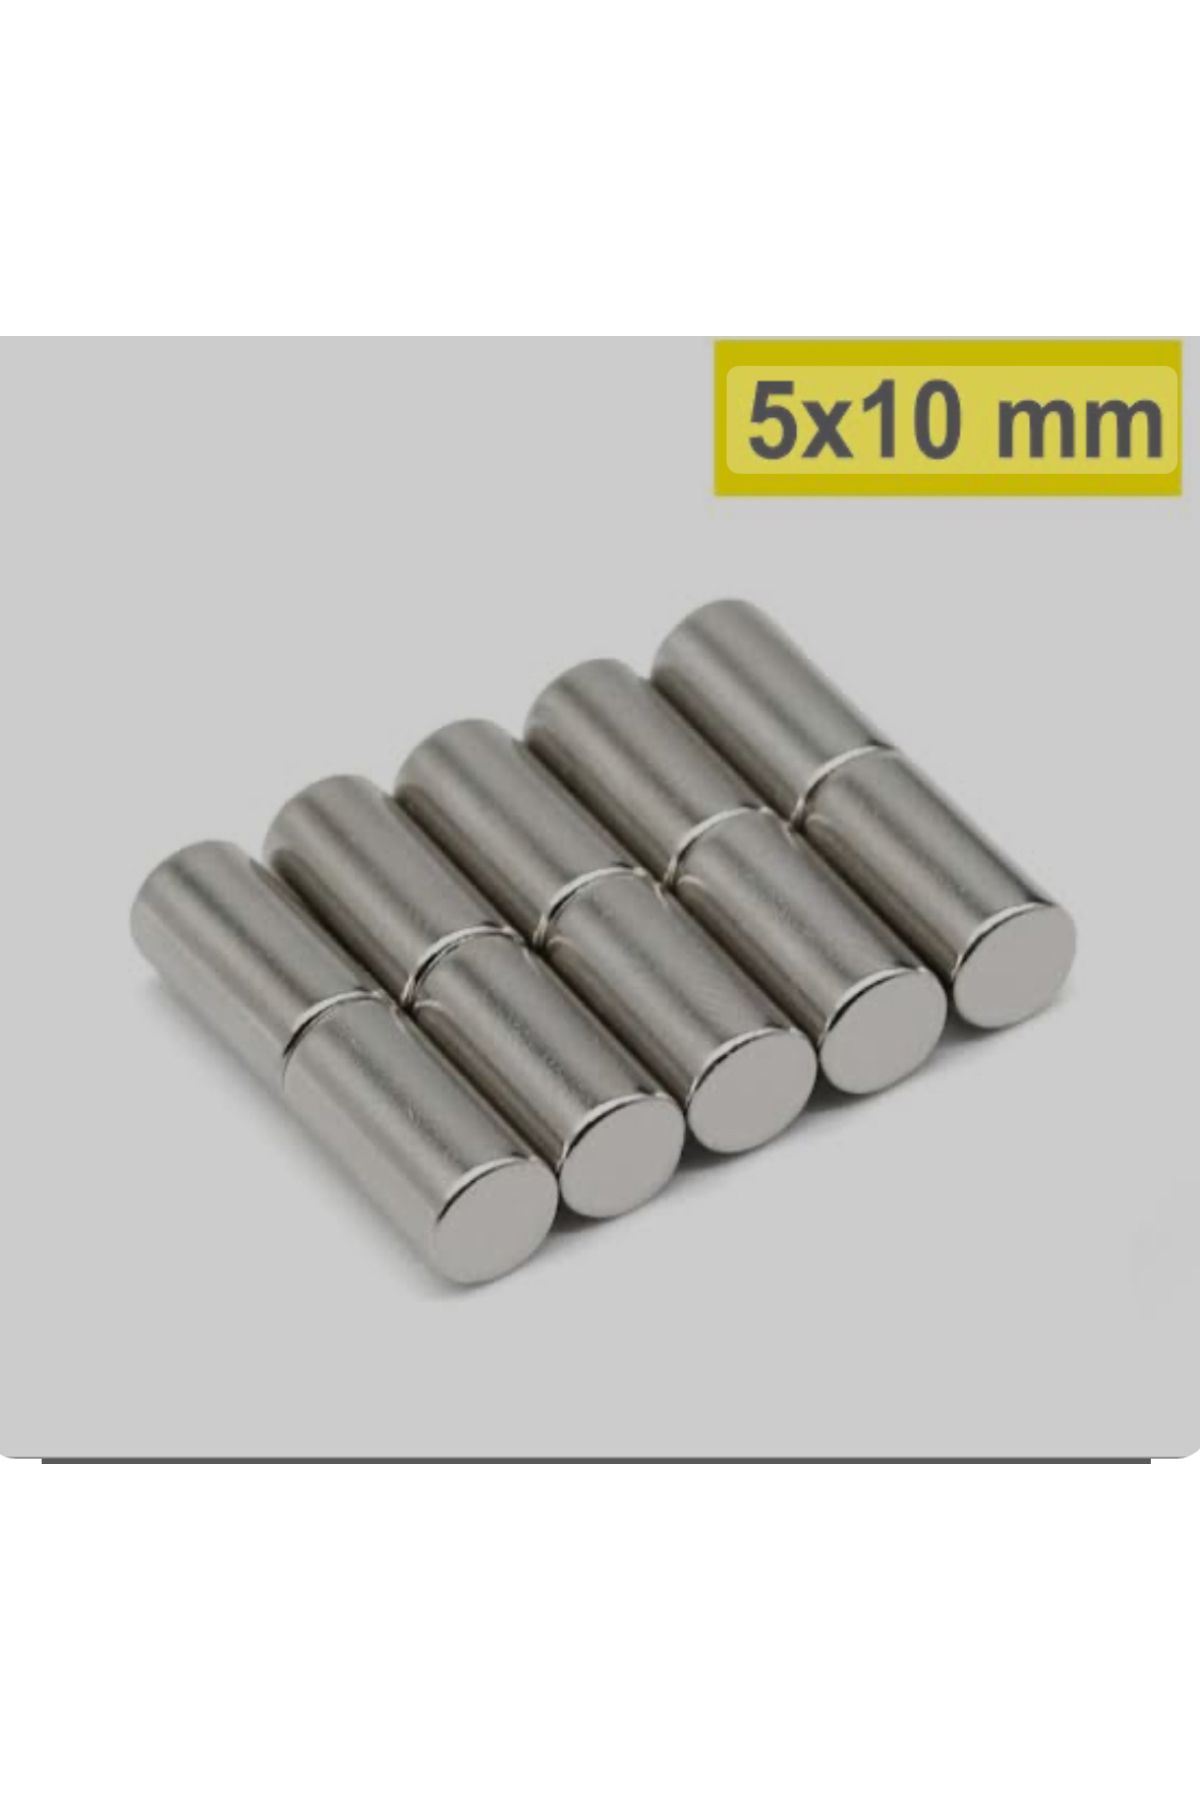 magnet market - 70 Adet 5x10mm - Çap 5mm X Kalınlık 10mm Neodyum Mıknatıs